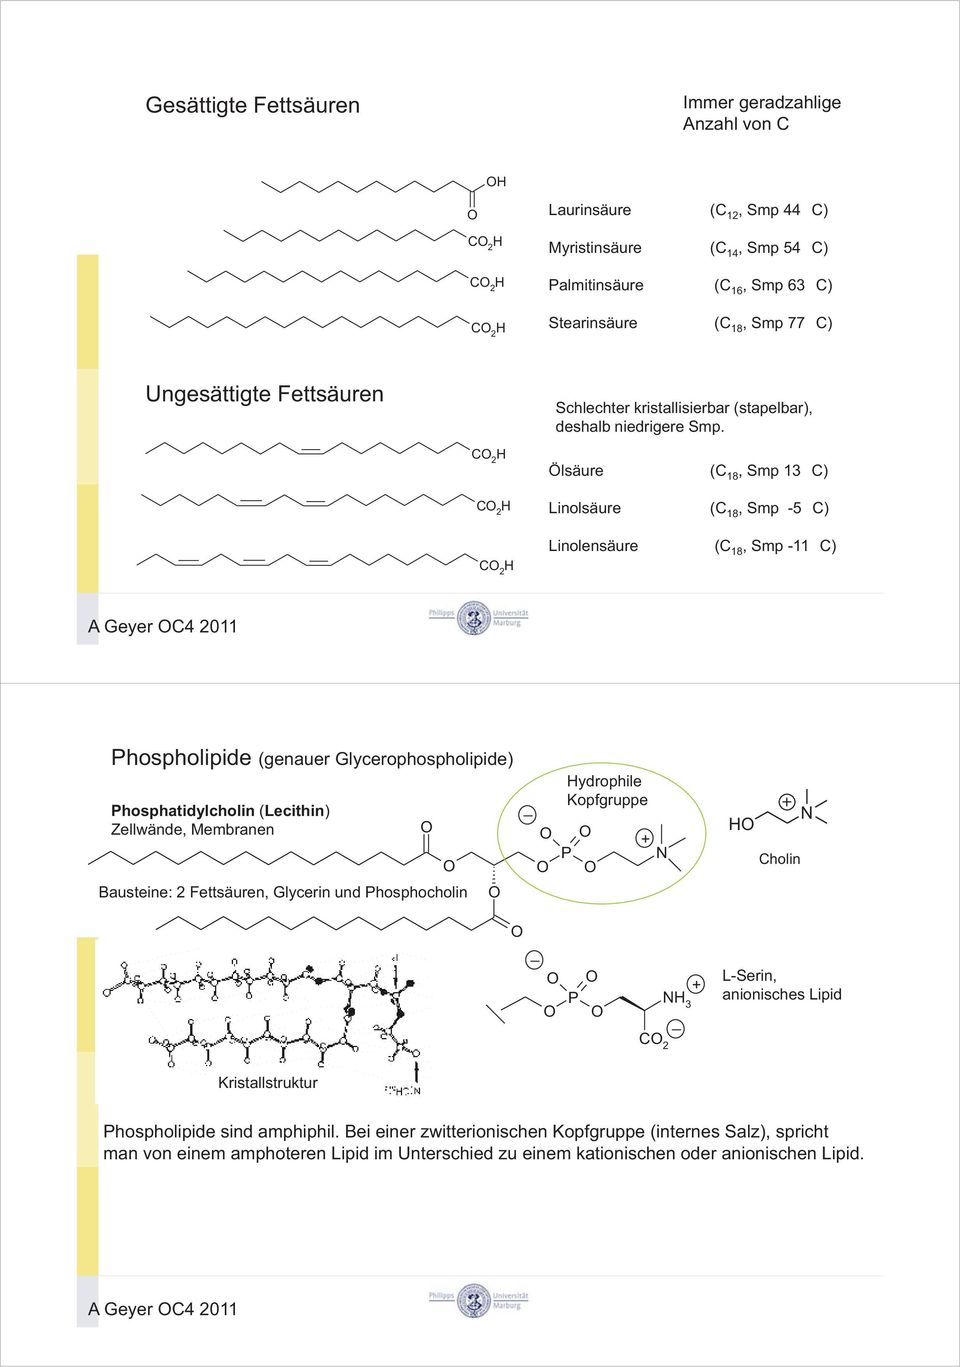 Ölsäure (C 18, Smp 13 C) Linolsäure (C 18, Smp -5 C) Linolensäure (C 18, Smp -11 C) A Geyer C4 2011 Phospholipide (genauer Glycerophospholipide) Phosphatidylcholin (Lecithin) Zellwände, Membranen